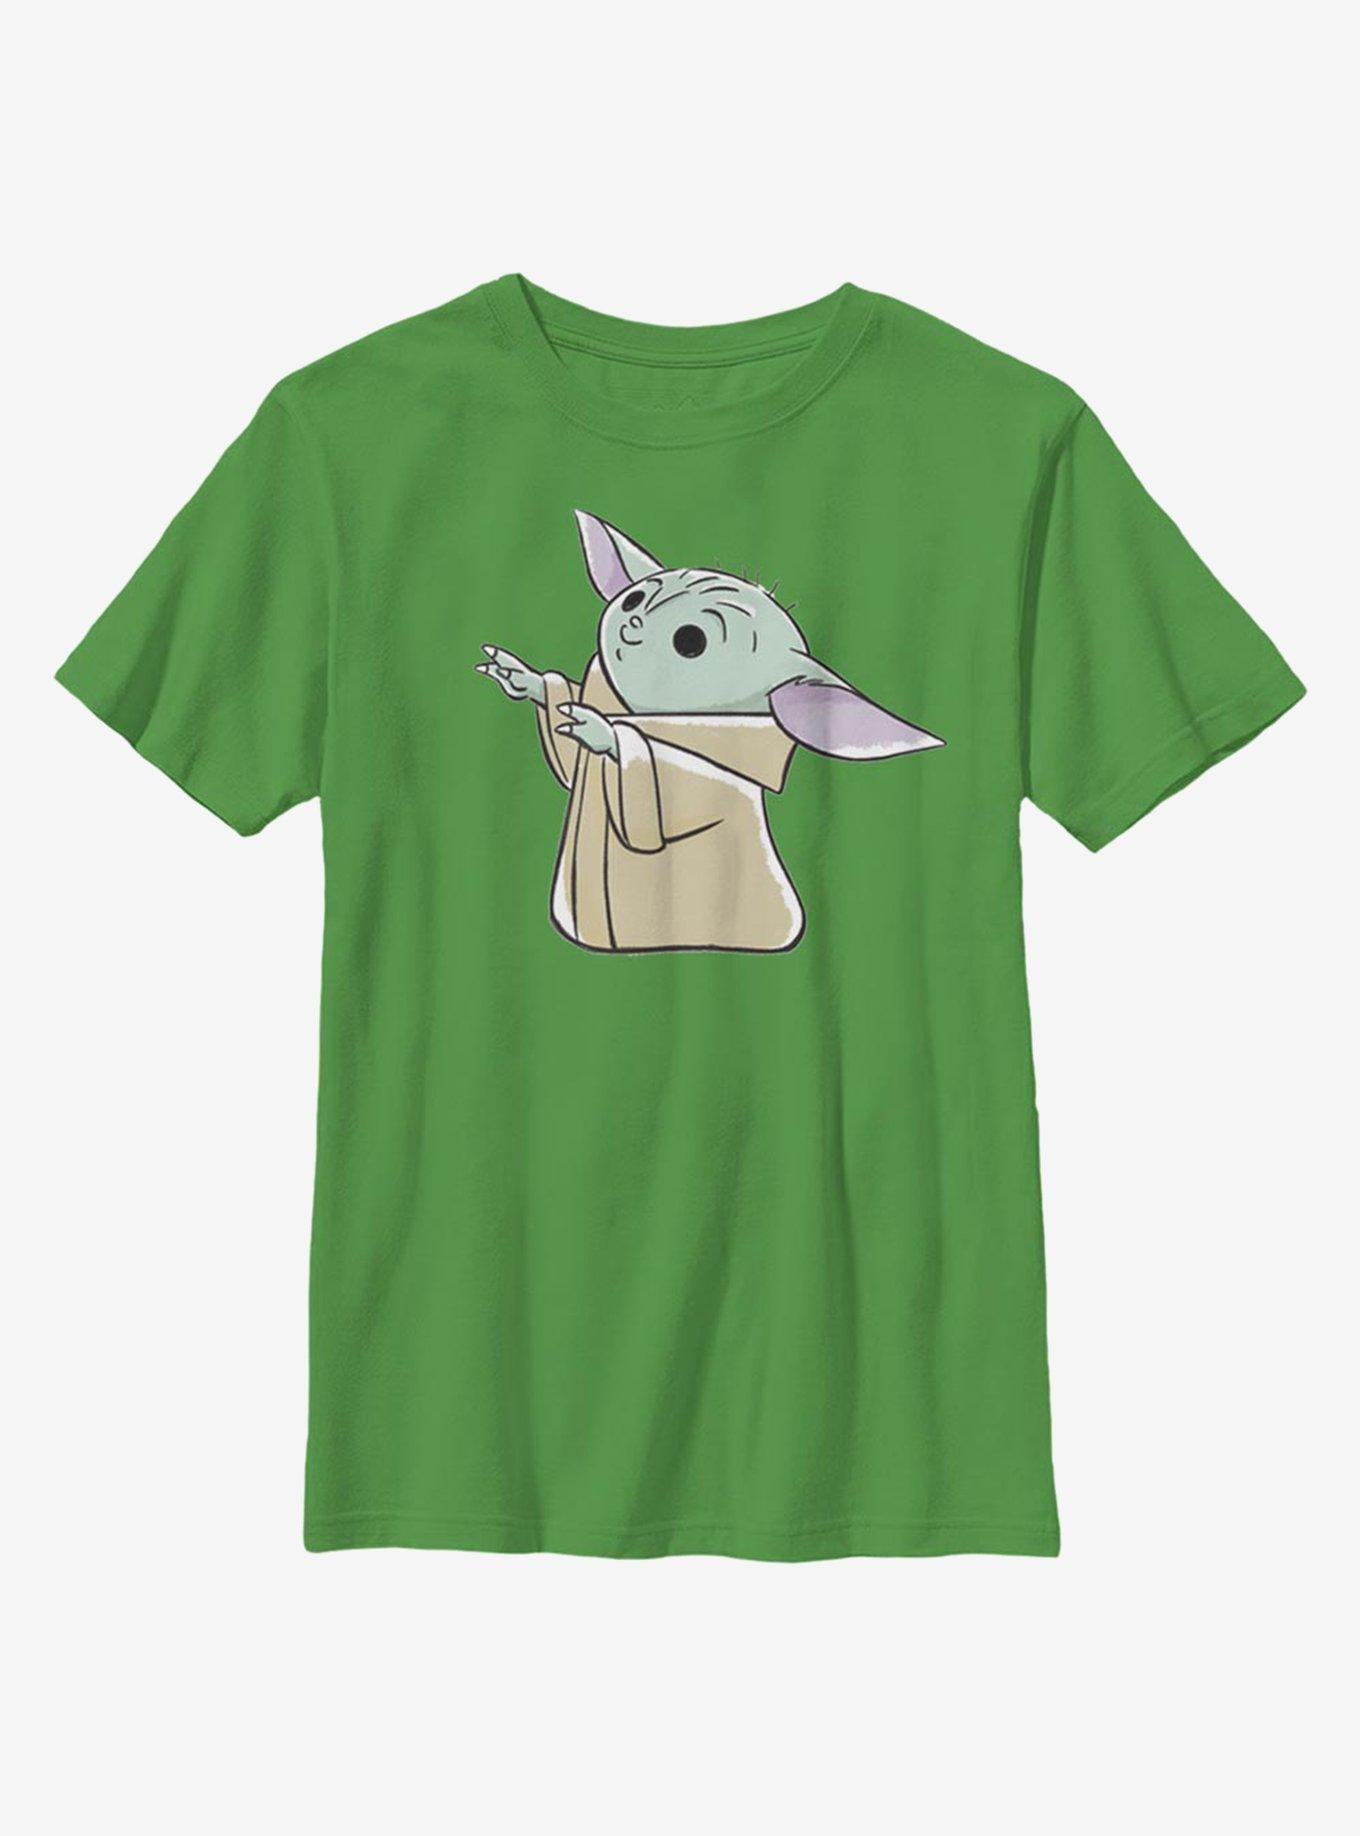 Star Wars The Mandalorian Yoda Reaching Youth T-Shirt, KELLY, hi-res